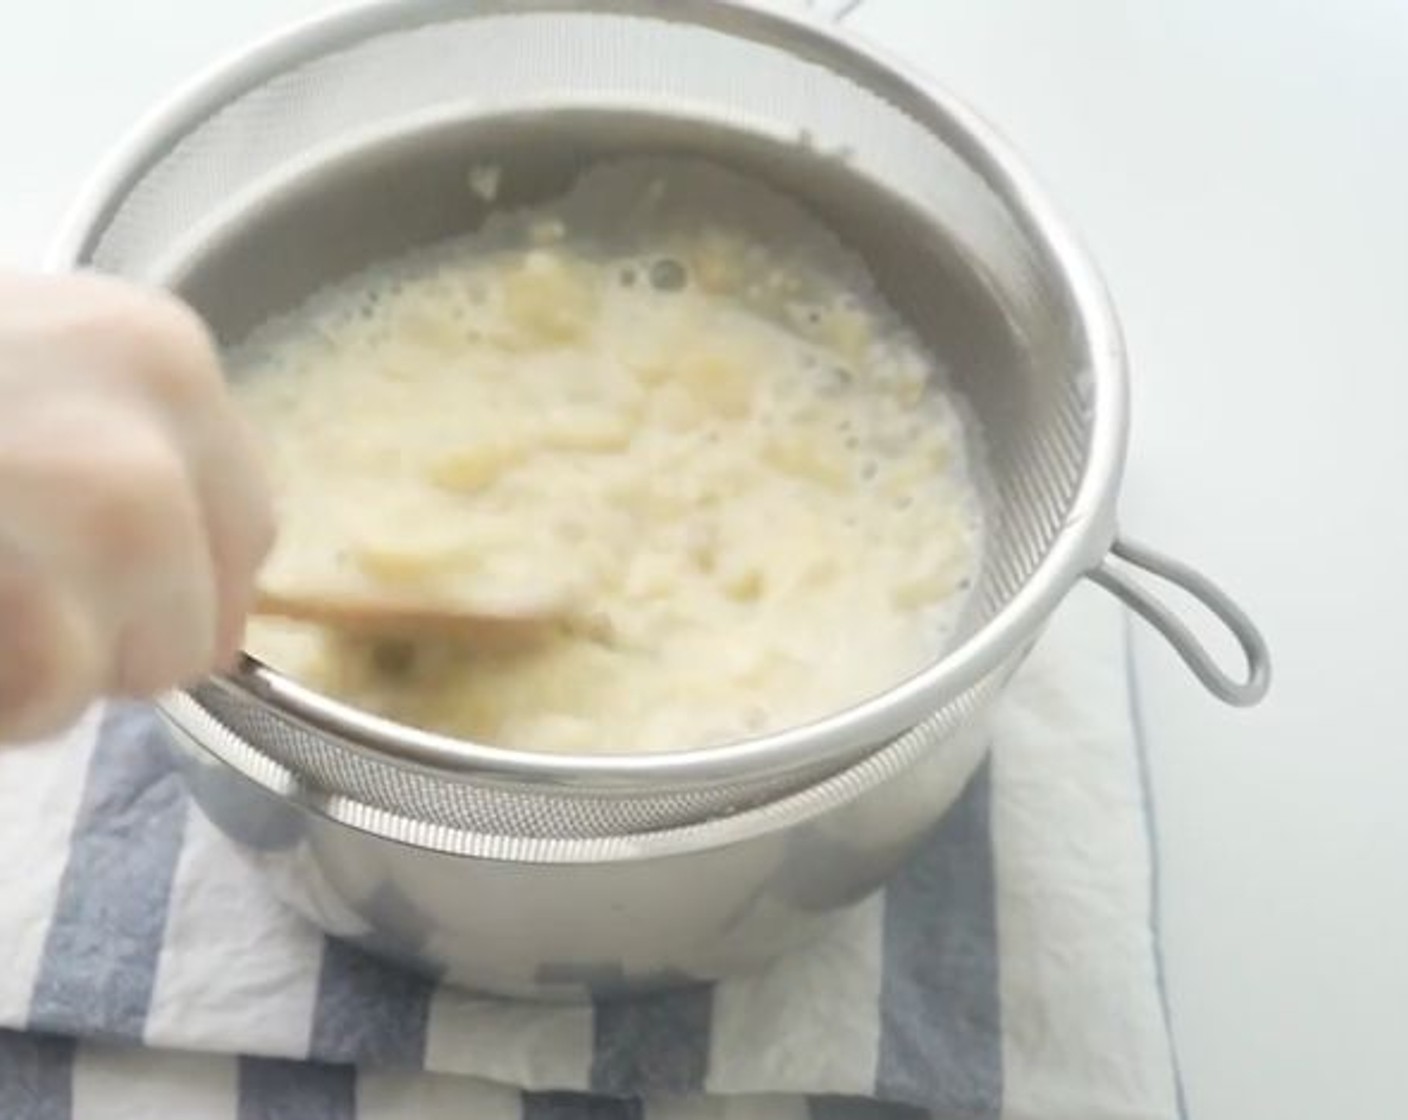 step 7 Strain the mixture through a sieve. Mash the banana lumps through the sieve with a spoon.